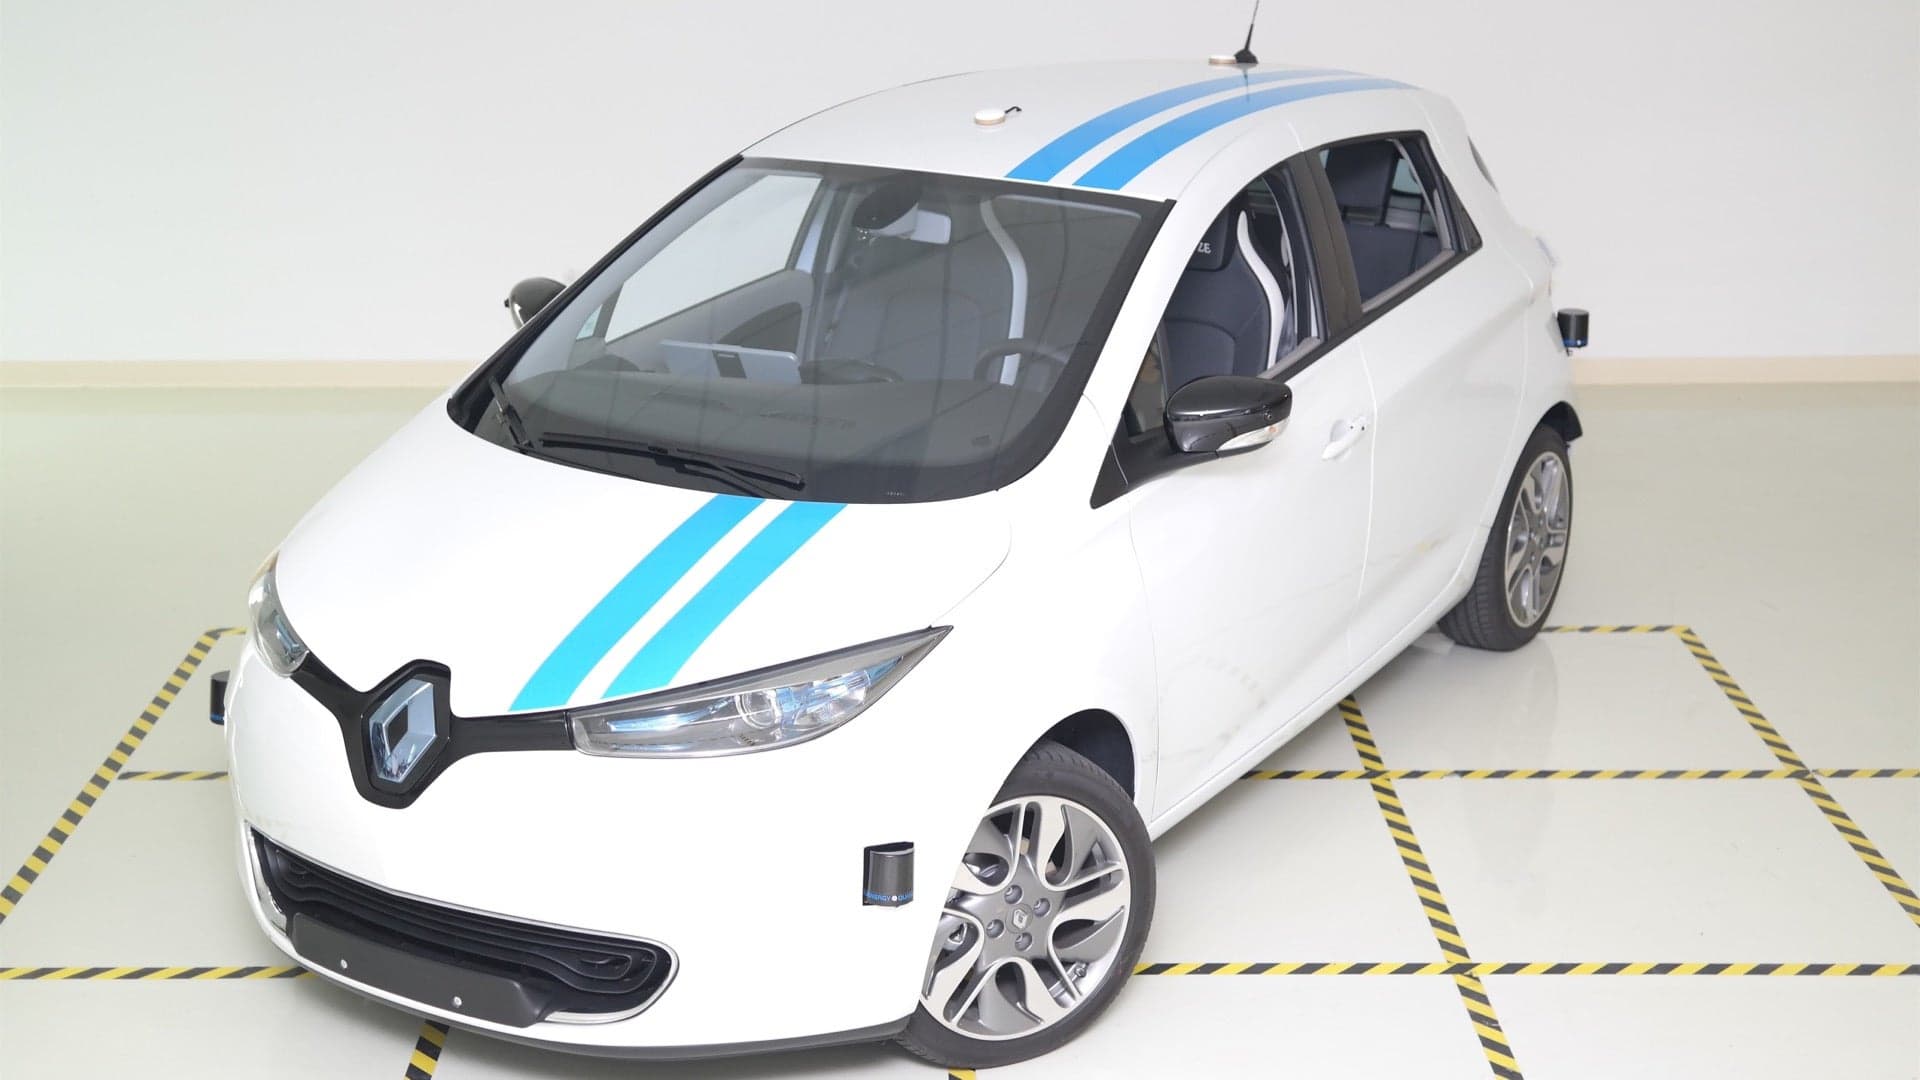 Renault Demonstrates Autonomous Collision Avoidance in Dramatic Fashion